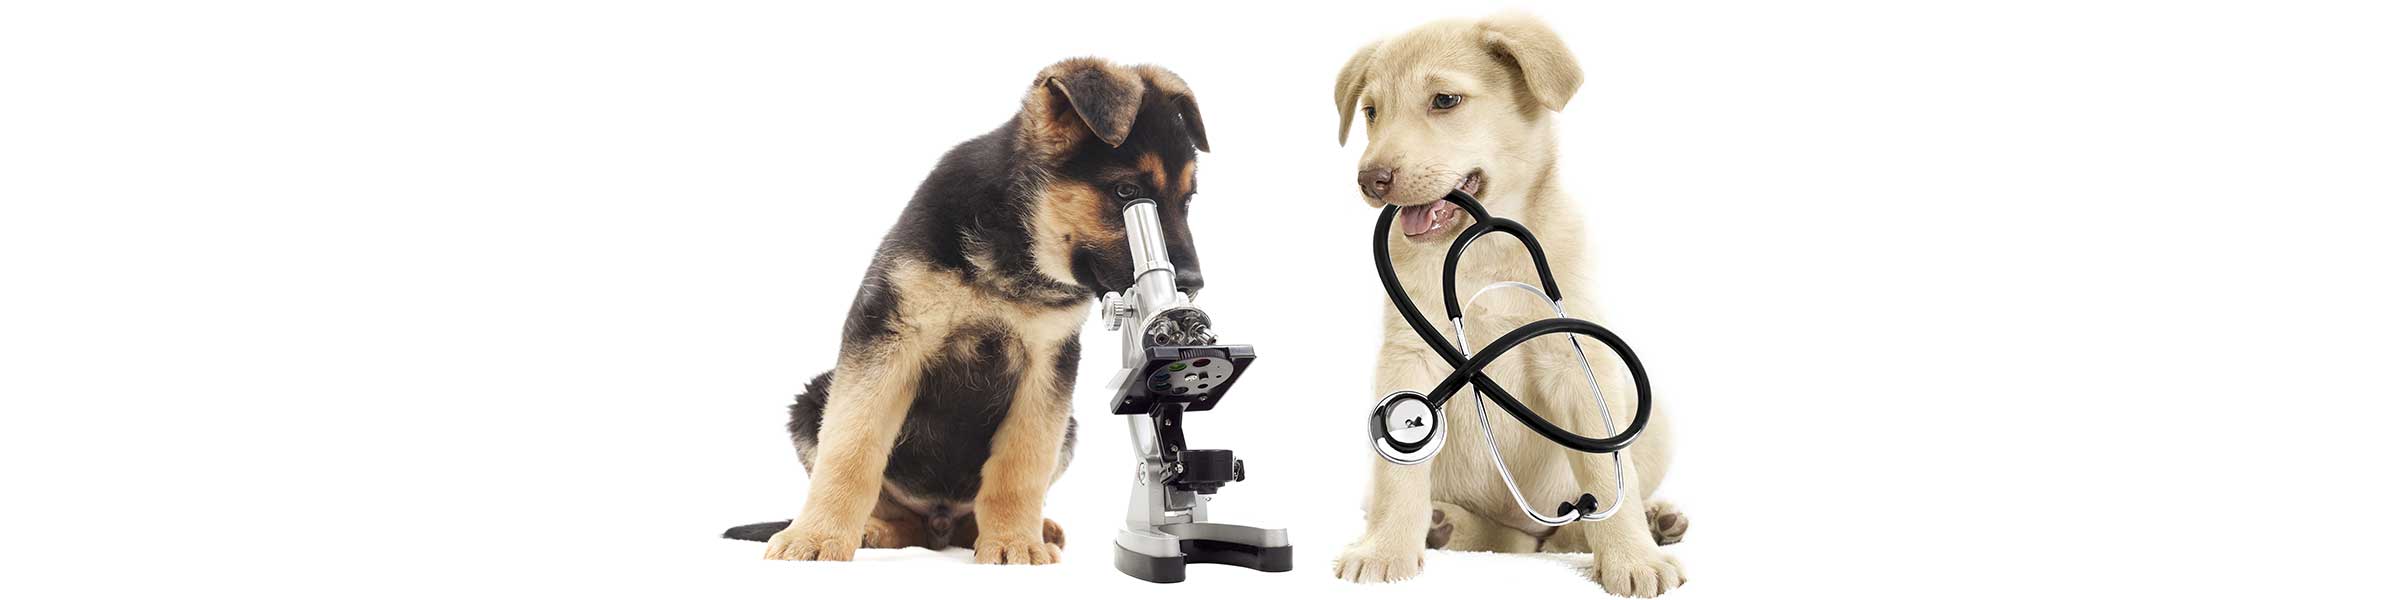 Laboratory Supplies For Animals | Ketchum Mfg. Co